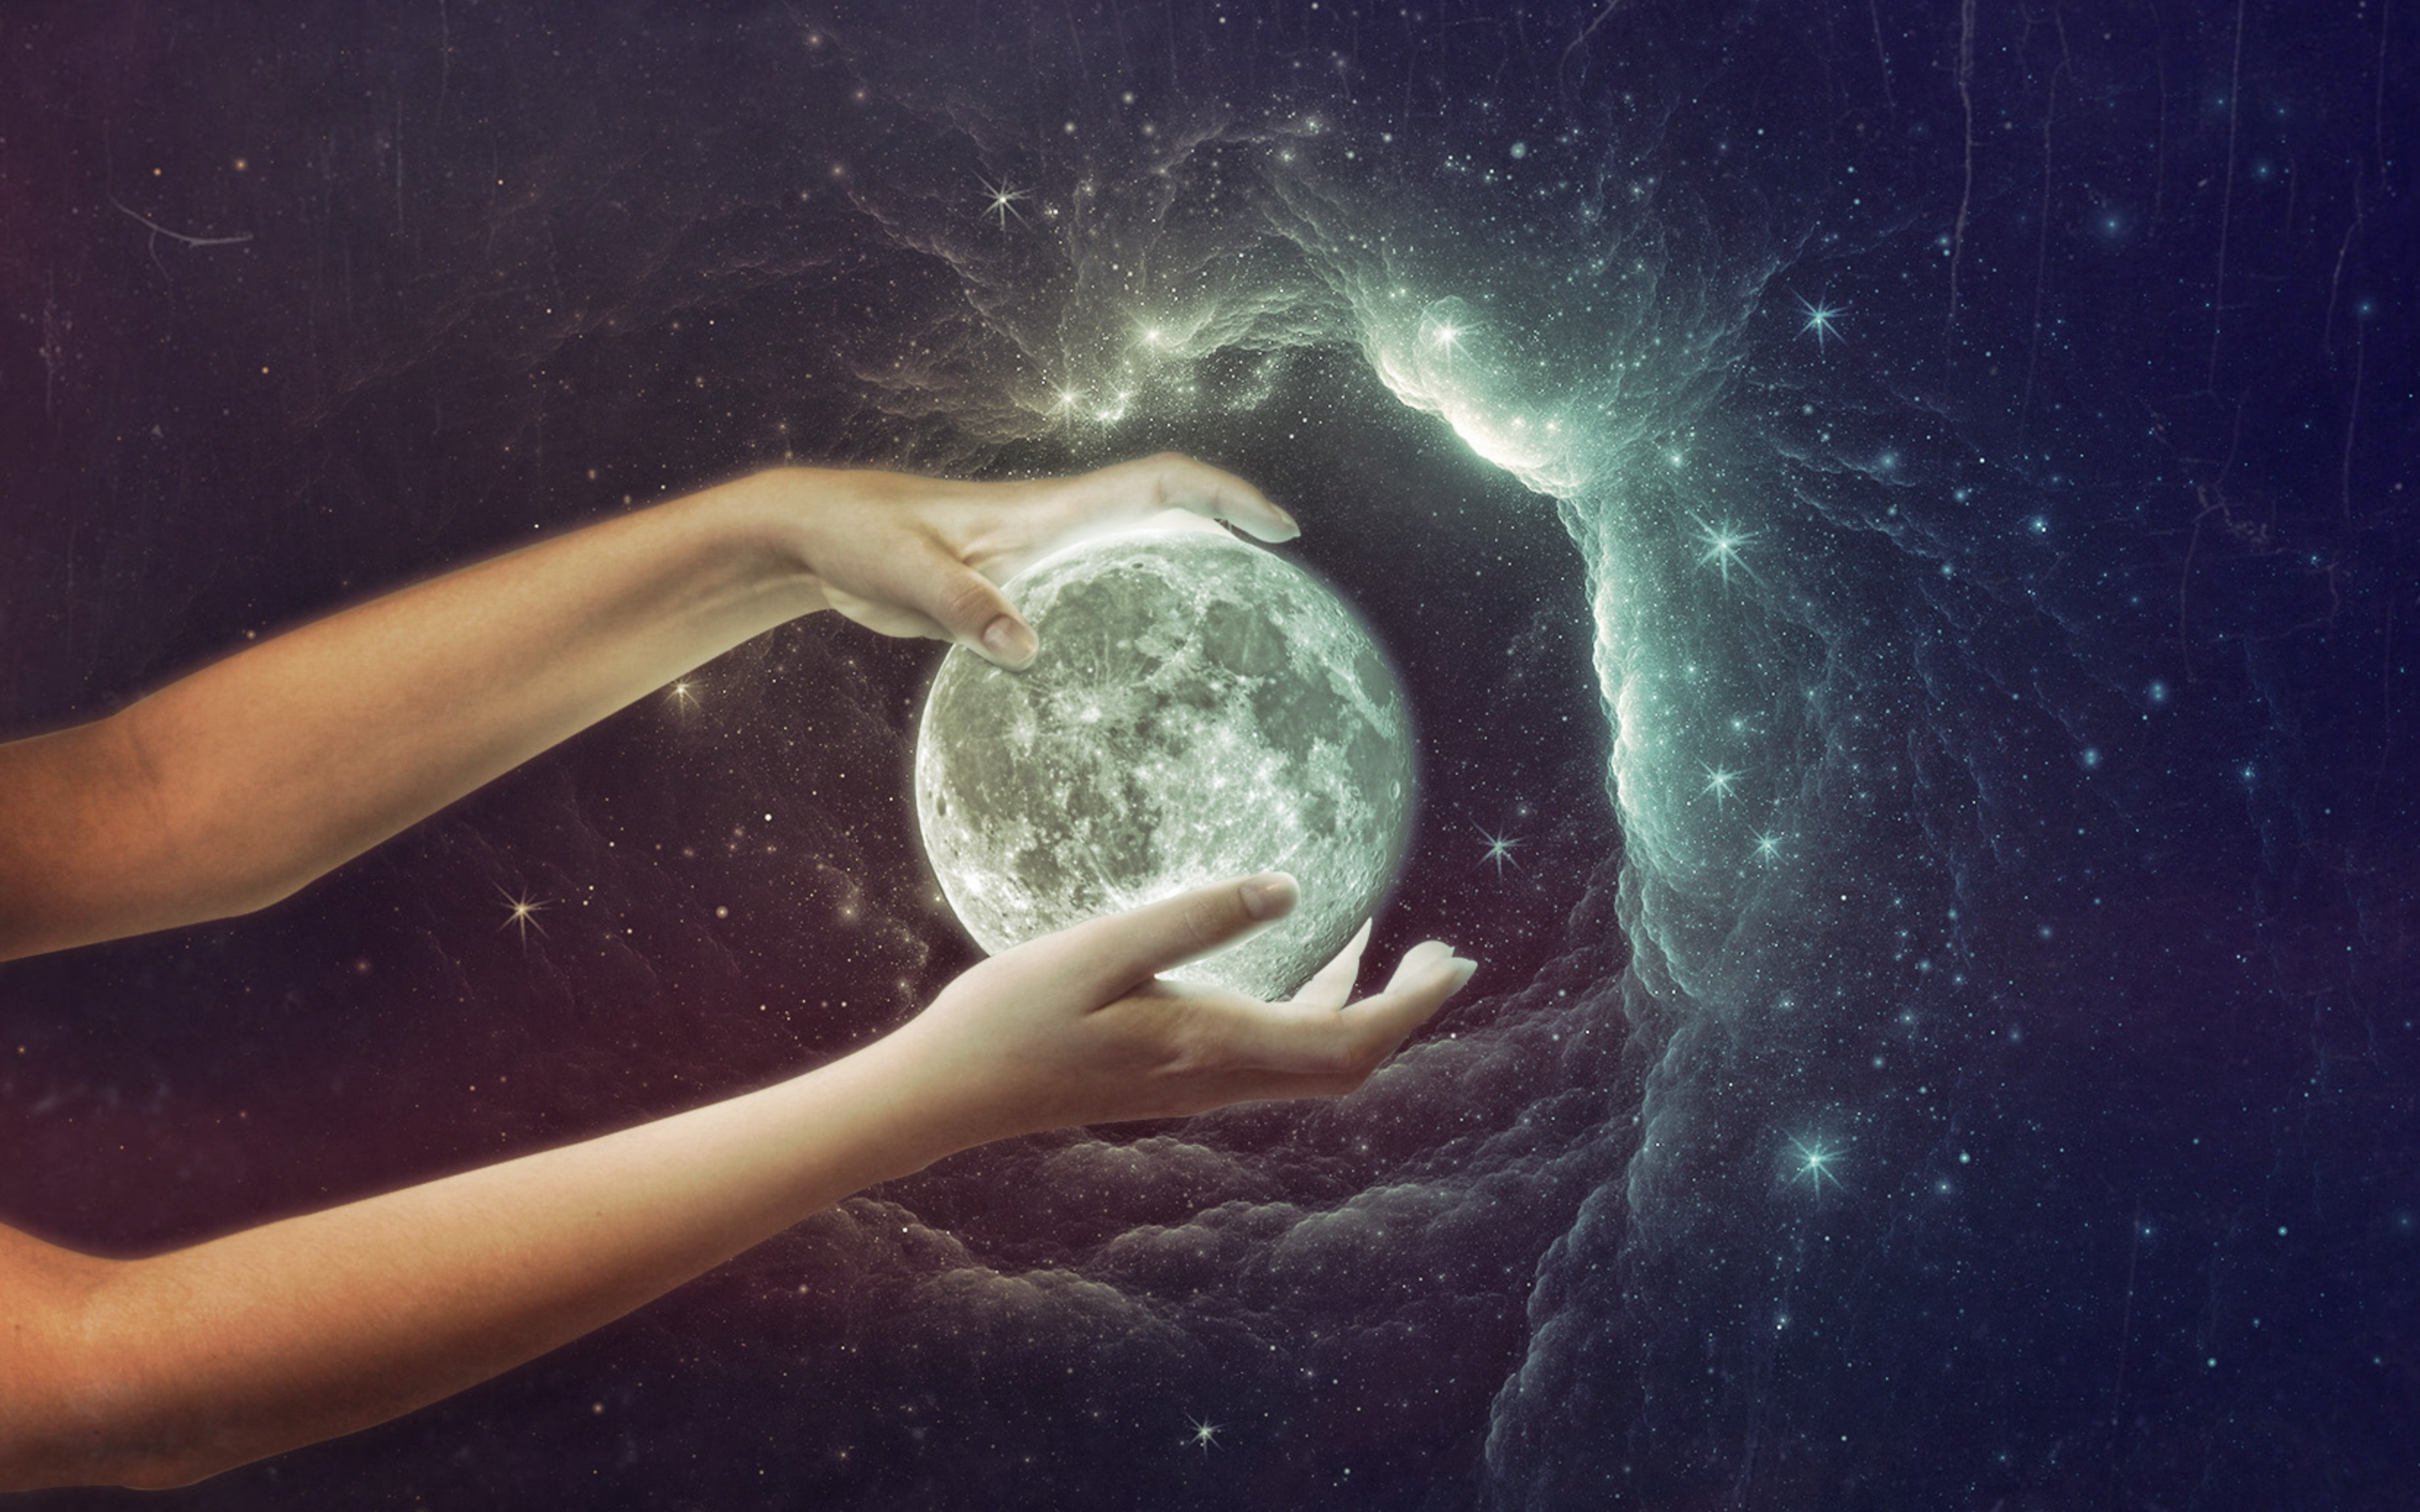 Hands, moon, planet, space, clouds, fantasy, art, 2880x1800 wallpaper